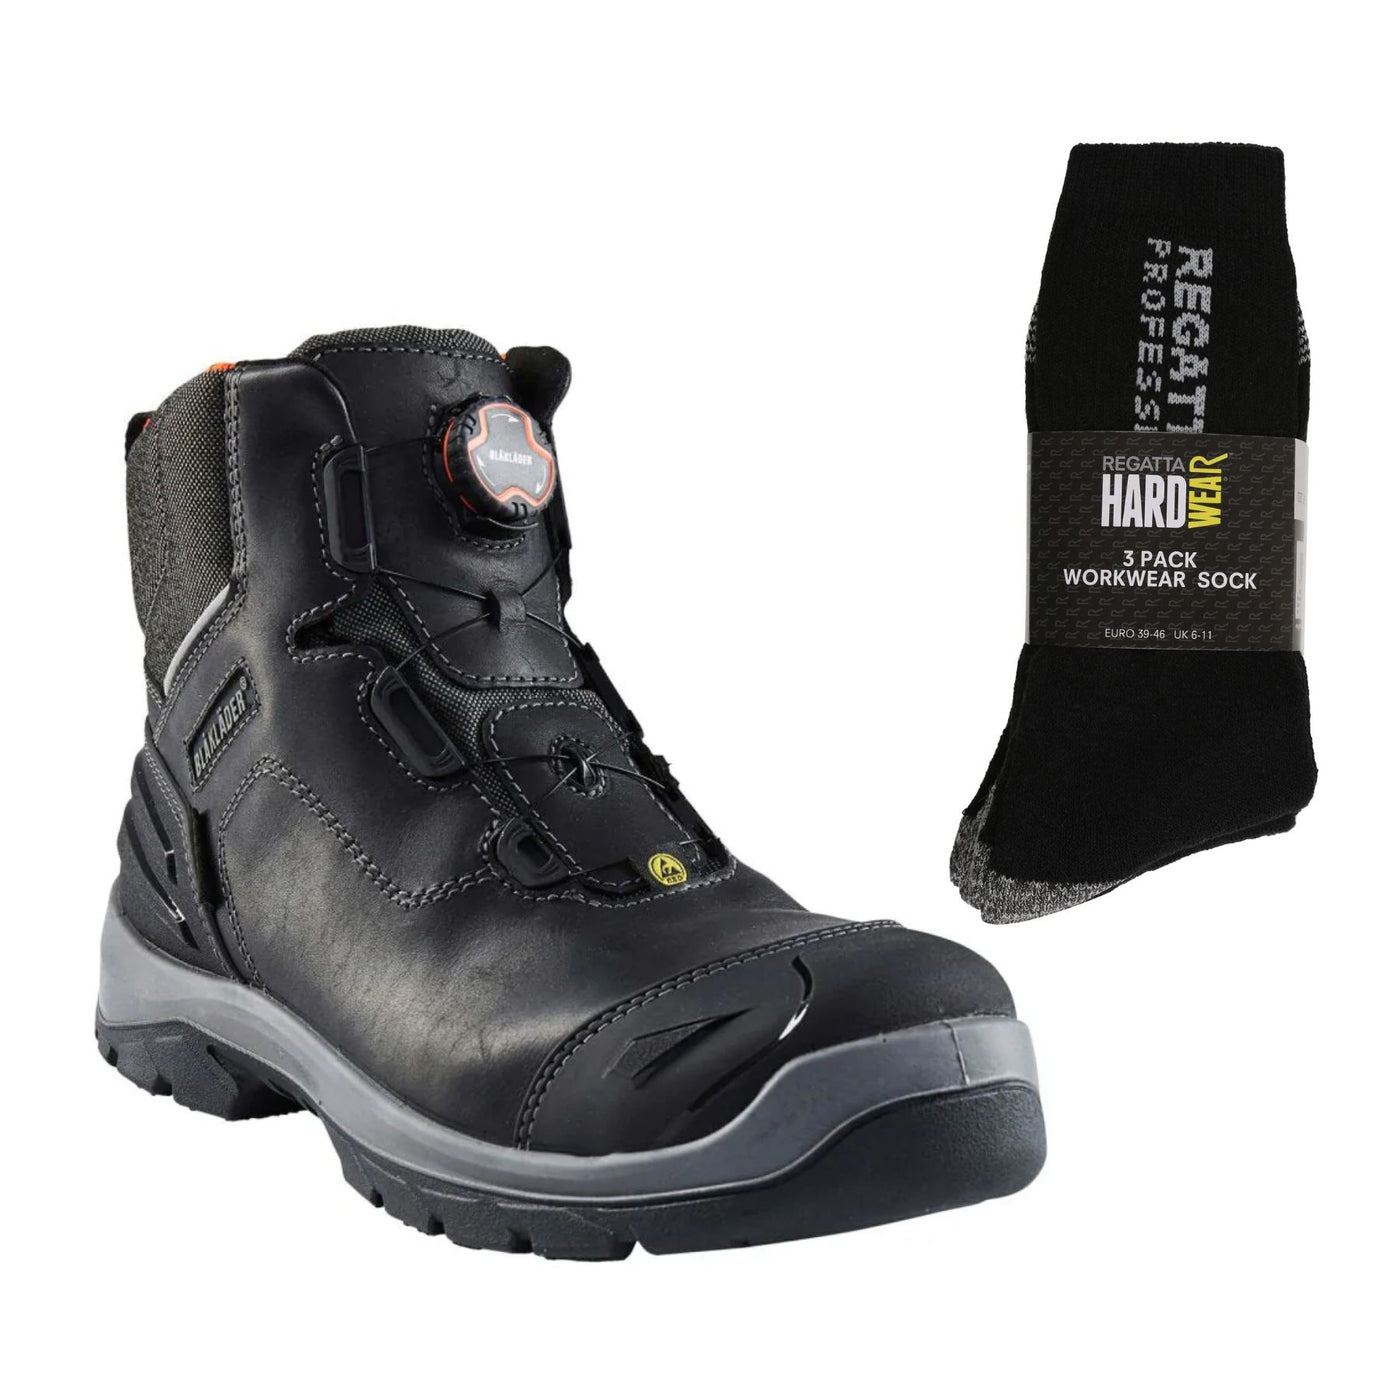 Blaklader 2455 Special Offer Pack - Elite Safety Boots S3 (24550000) + 3 Pairs Work Socks